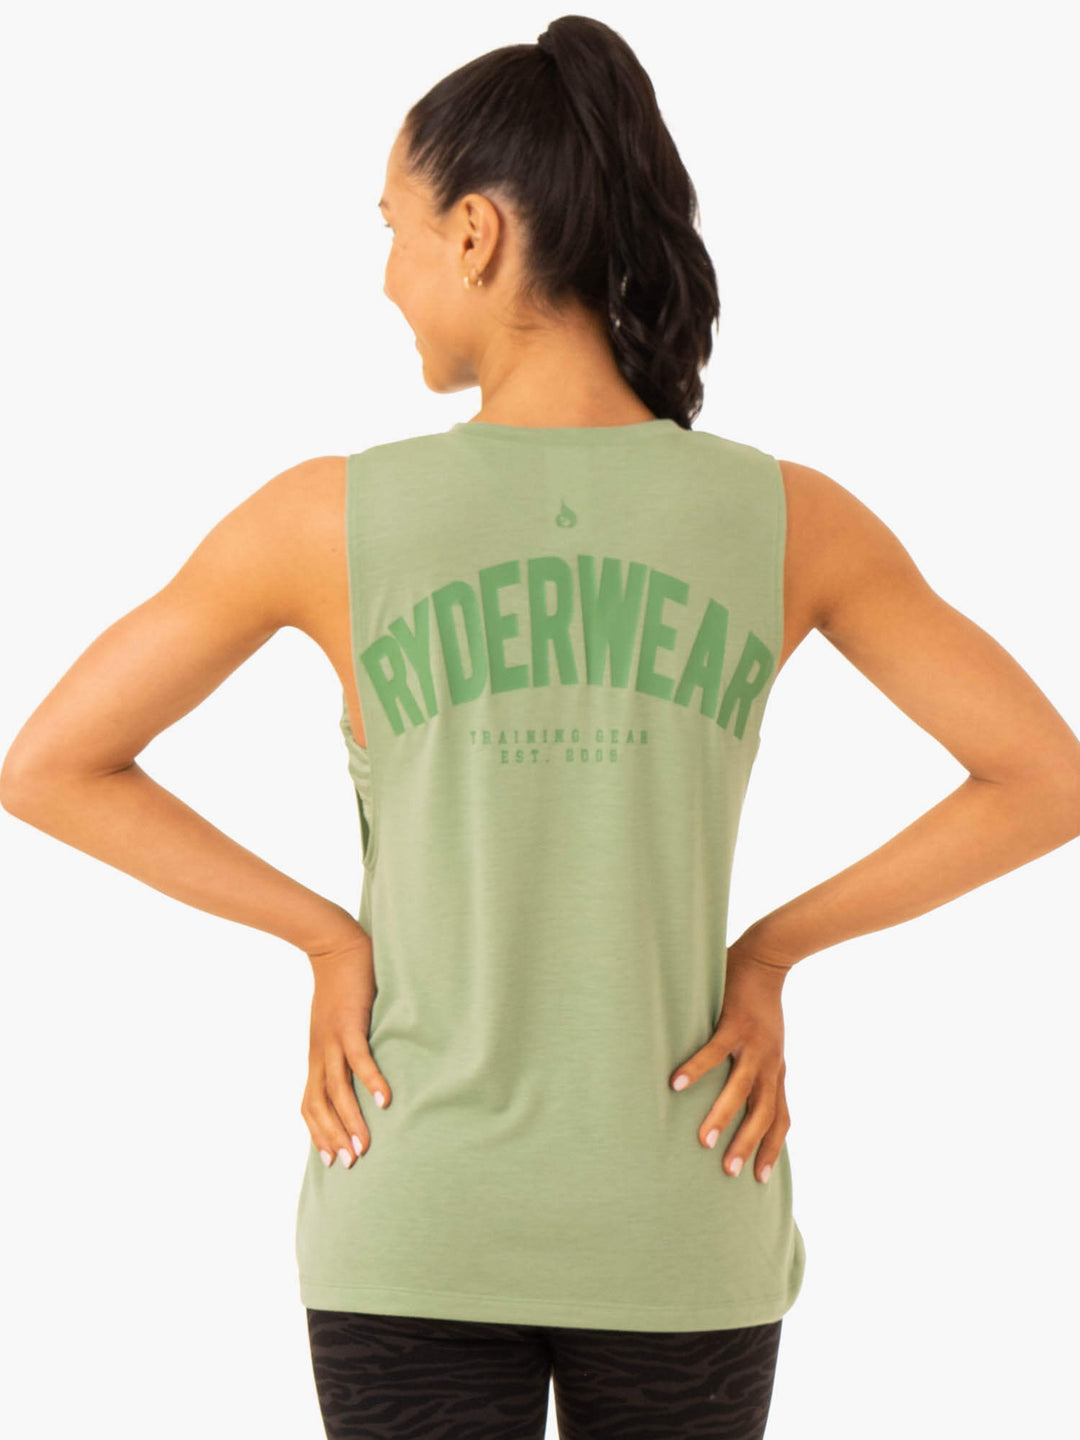 Emerge Training Tank - Jade Green Clothing Ryderwear 